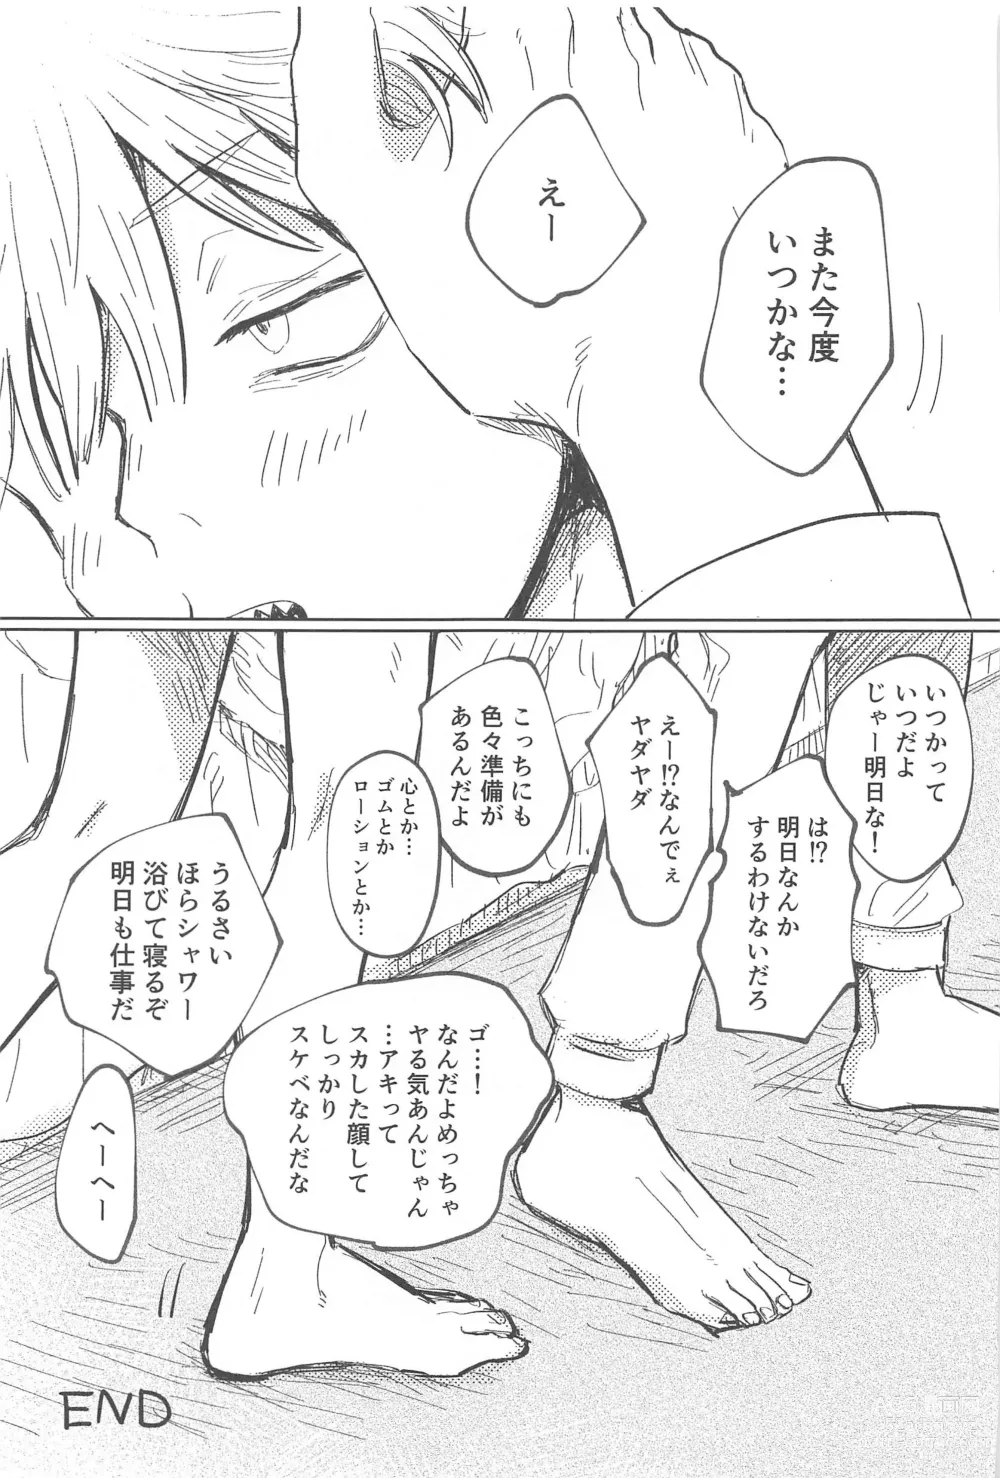 Page 39 of doujinshi Kawaii Anoko